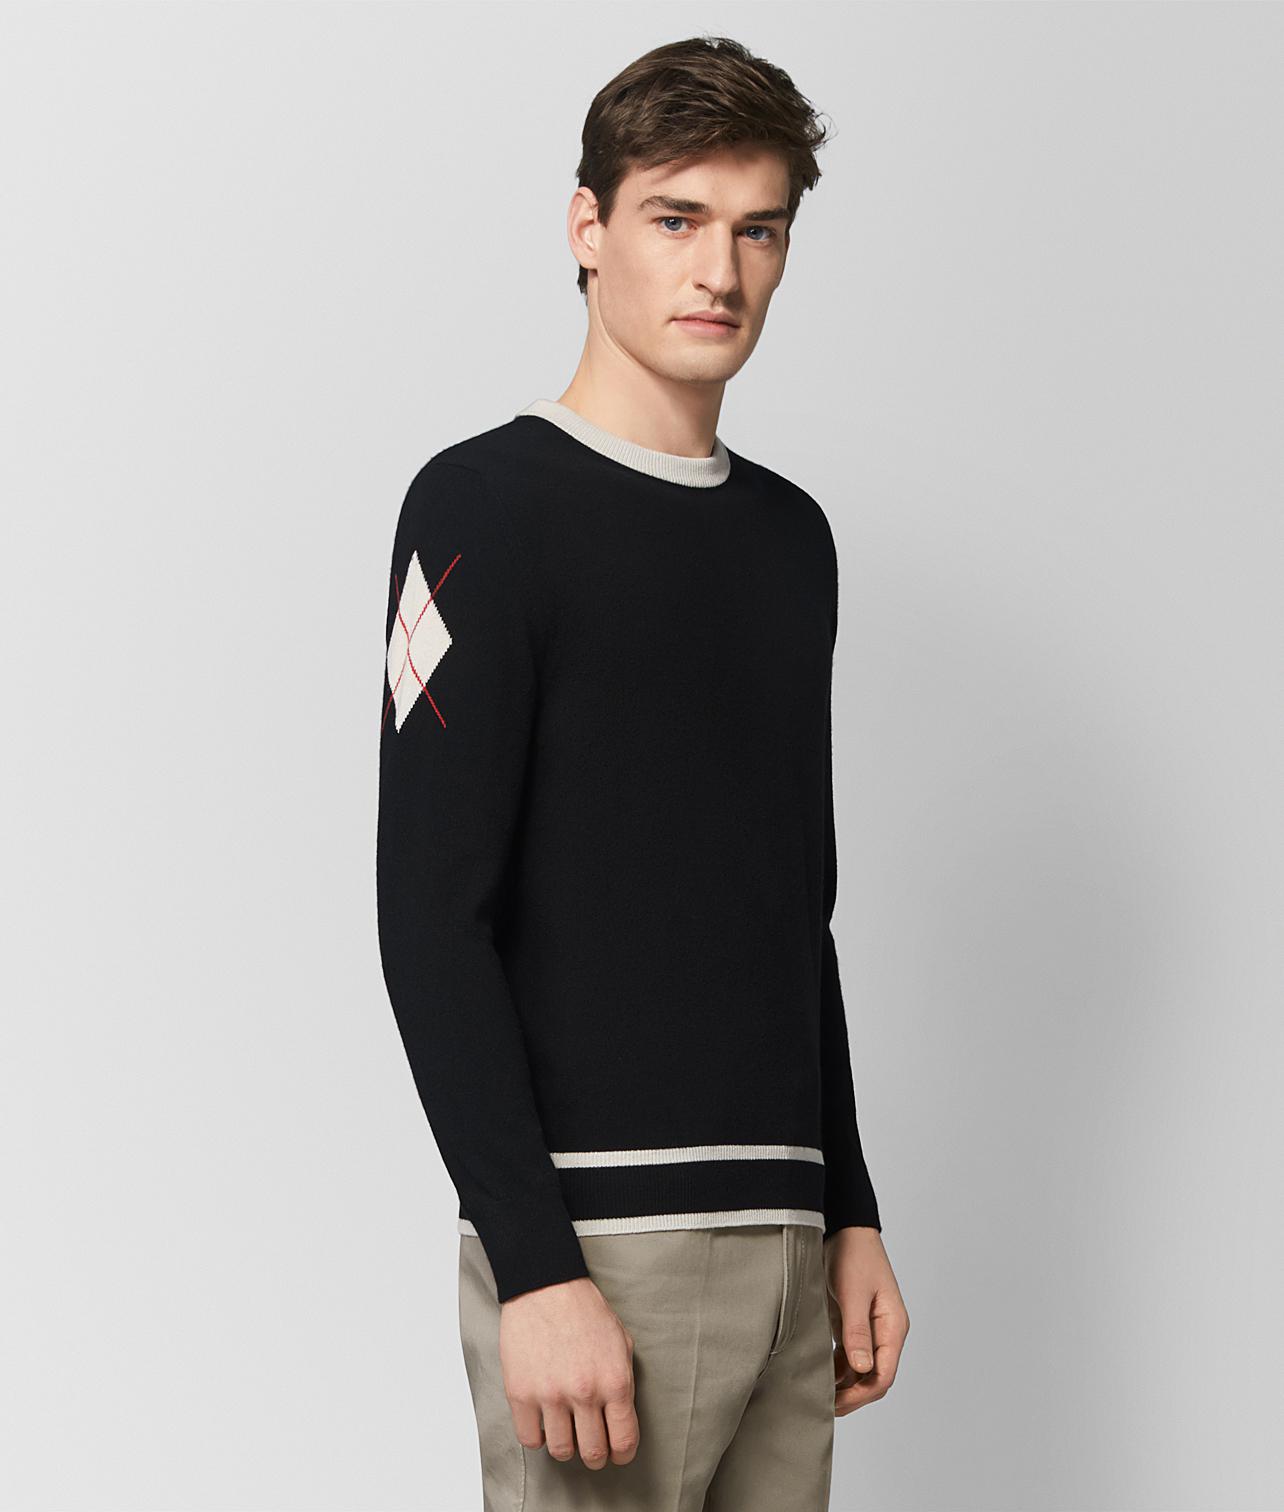 Bottega Veneta Nero Cashmere Sweater in Black for Men - Lyst